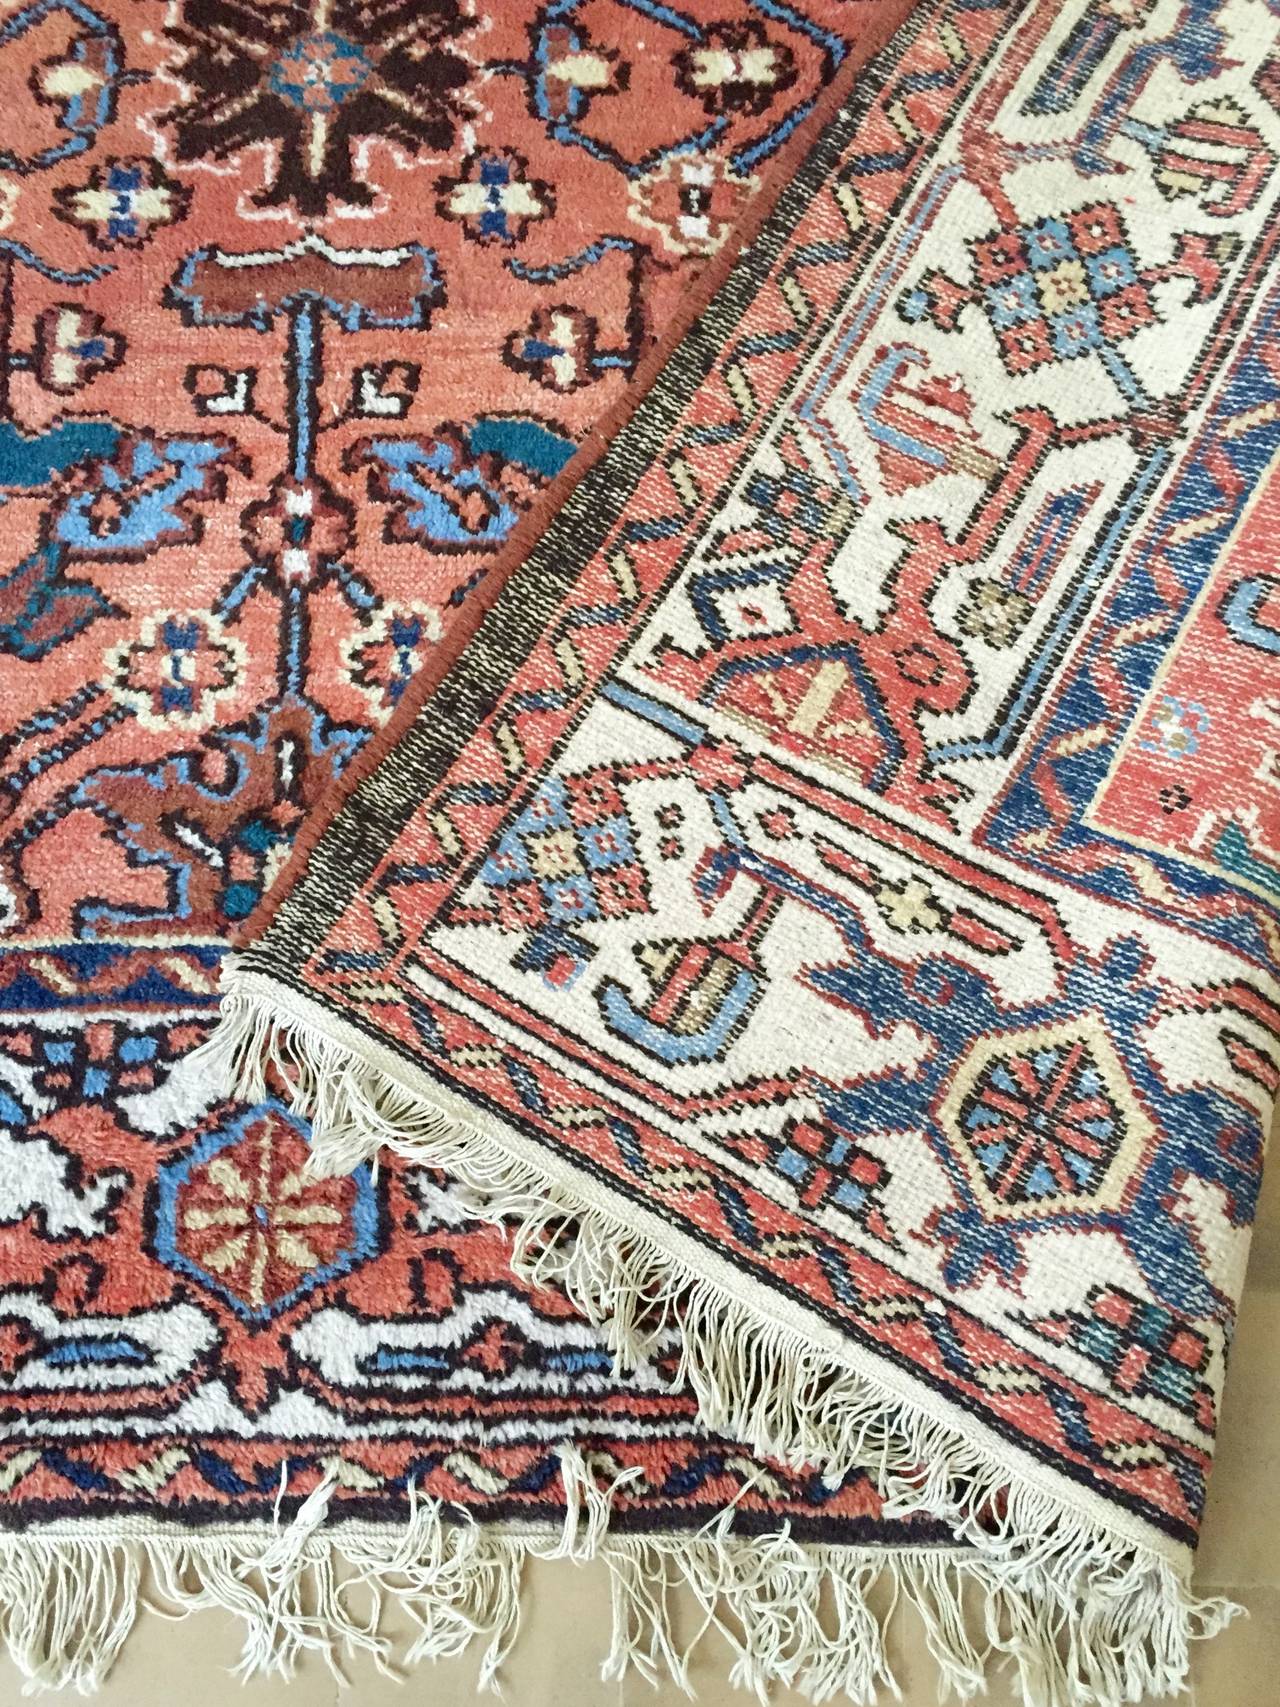 20th Century Lovely Semi-Antique Peach Color Persian Carpet